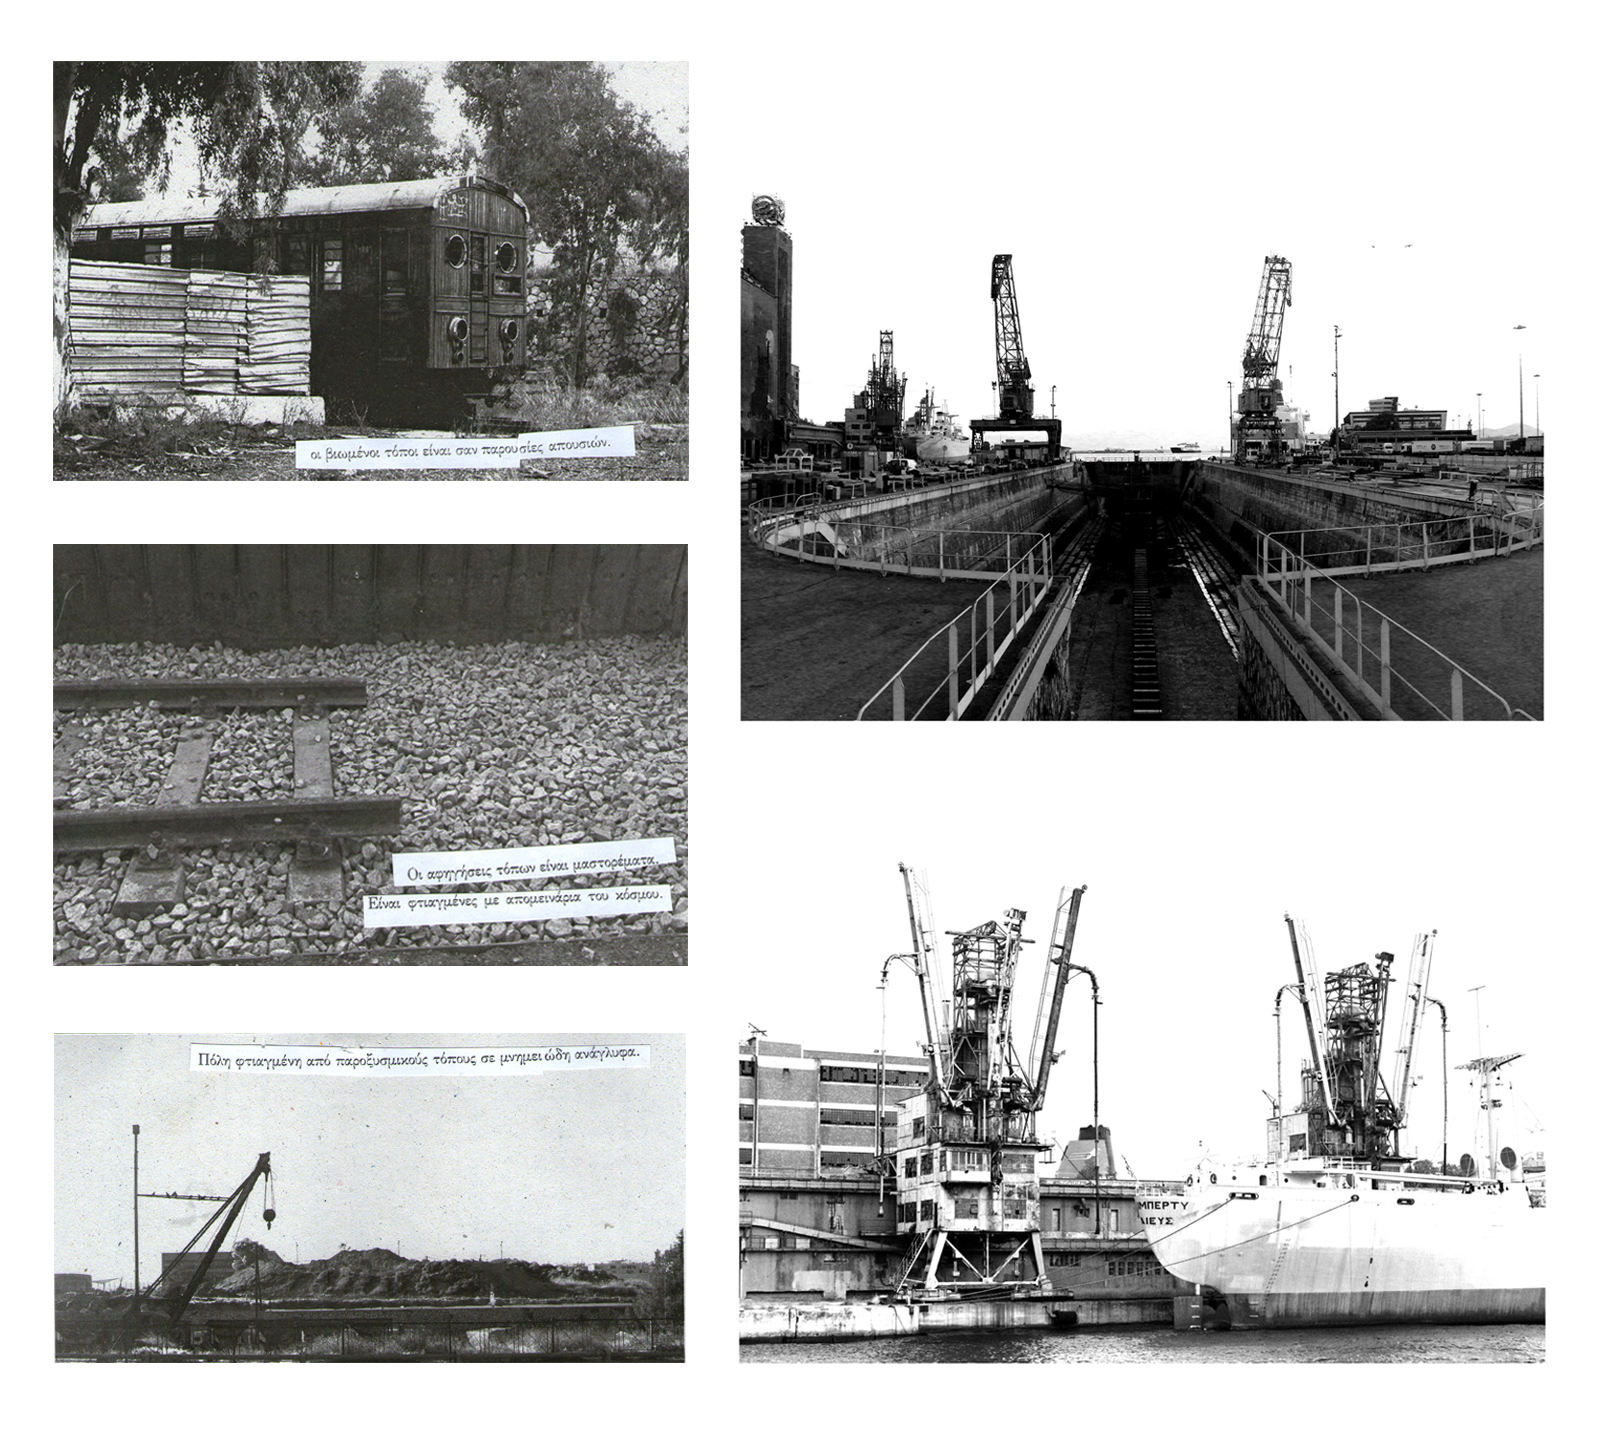 Archisearch Ετεροτοπίες της φθοράς: Ποιητικές κατασκευές στις λιμενικές εγκαταστάσεις του βιομηχανικού Πειραιά | Διπλωματική εργασία από τις Αθανασία Κοκκάλα και Μυρσίνη Μαυραπίδη